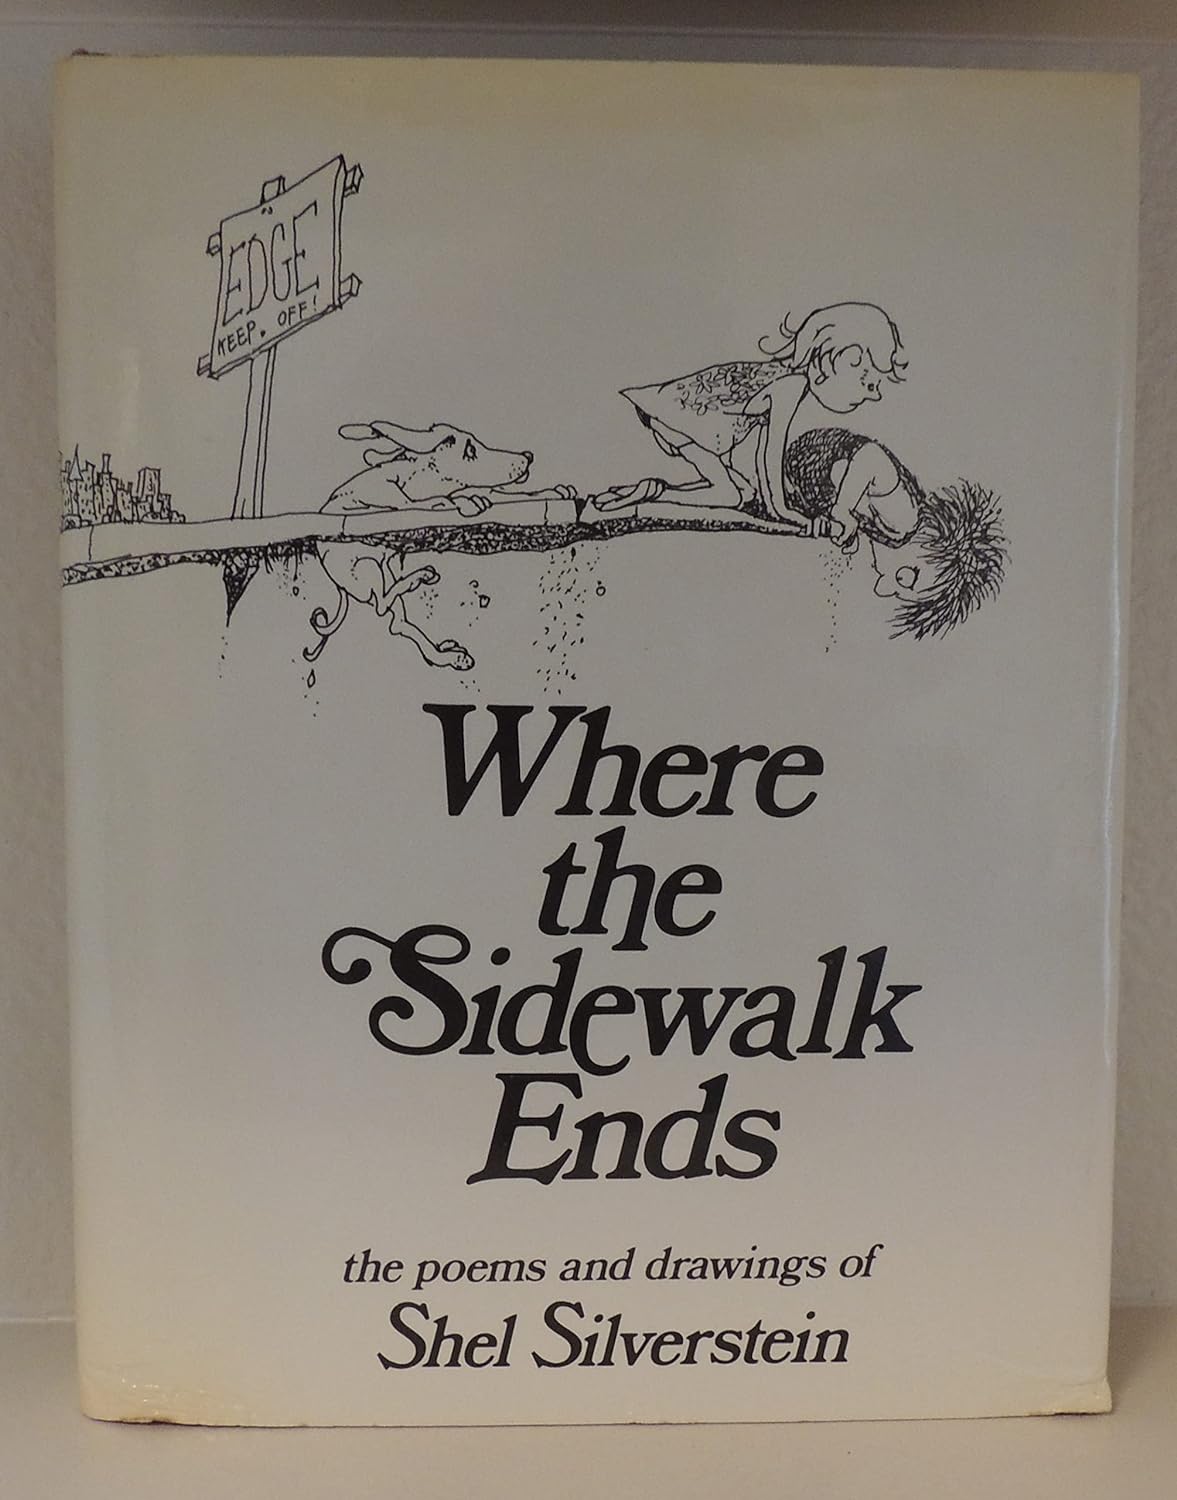 Where the Sidewalk Ends by Shel Silverstein (1974)